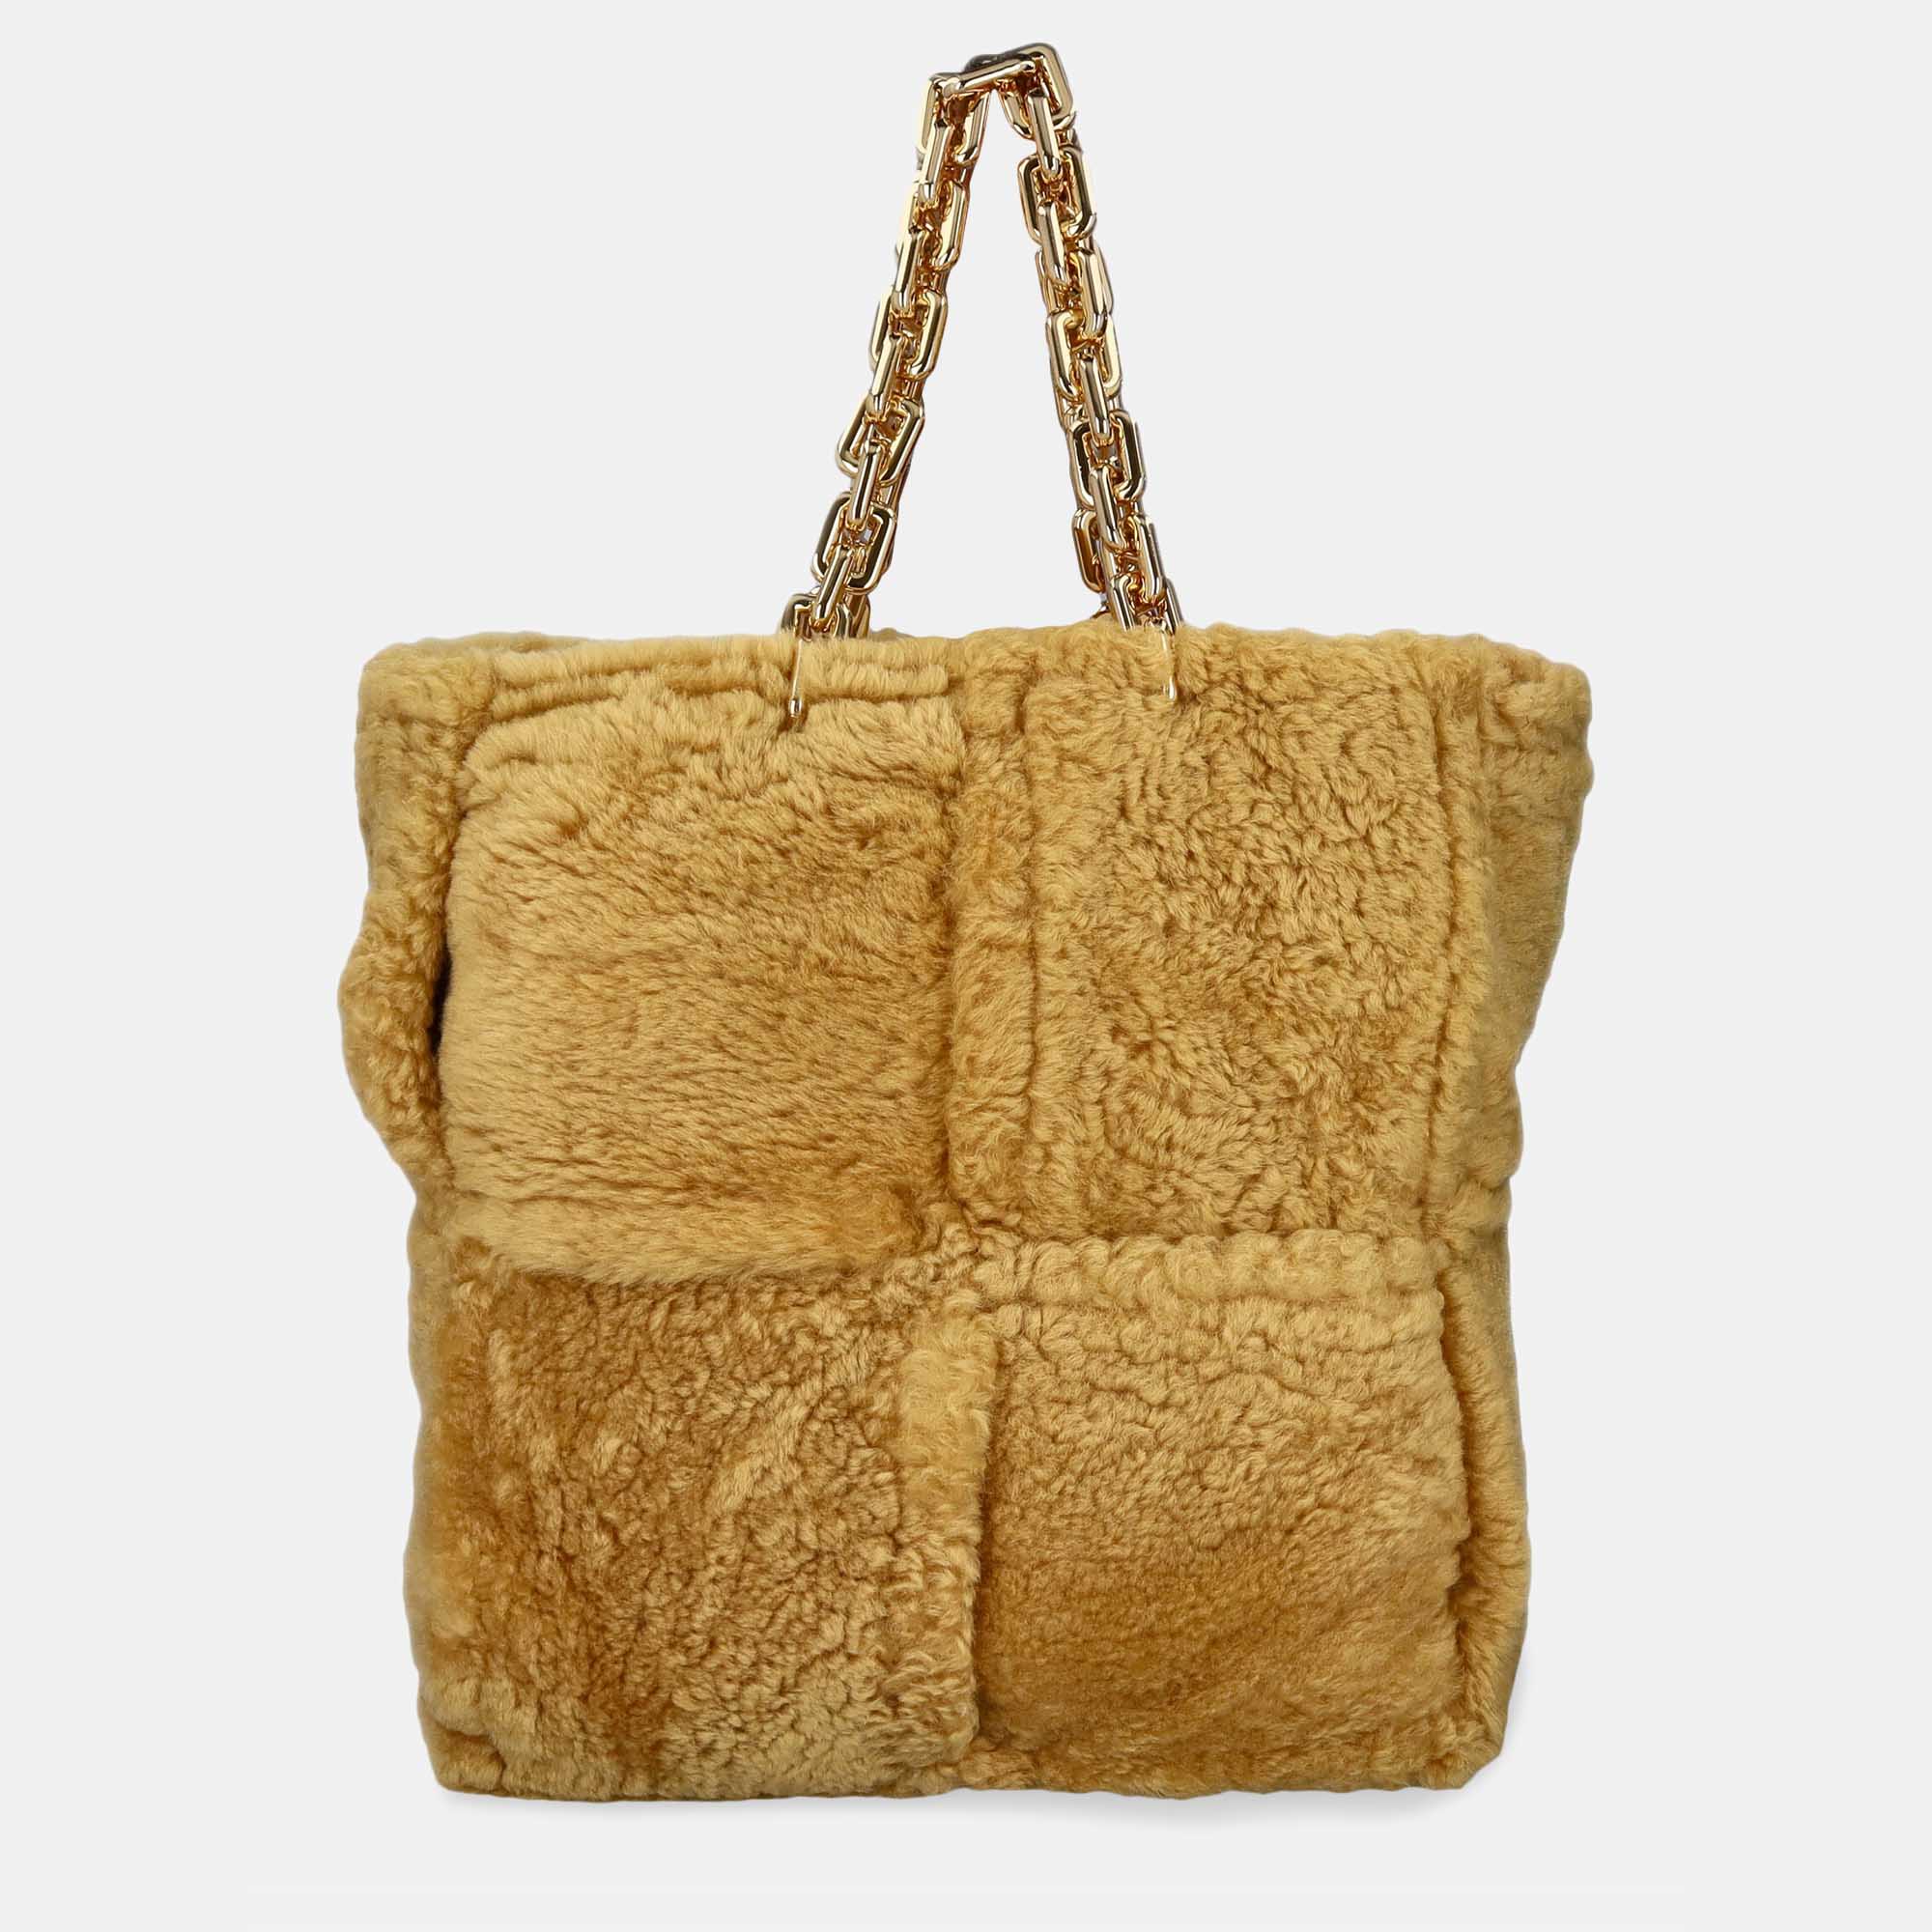 Bottega Veneta  Women's Leather Tote Bag - Beige - One Size